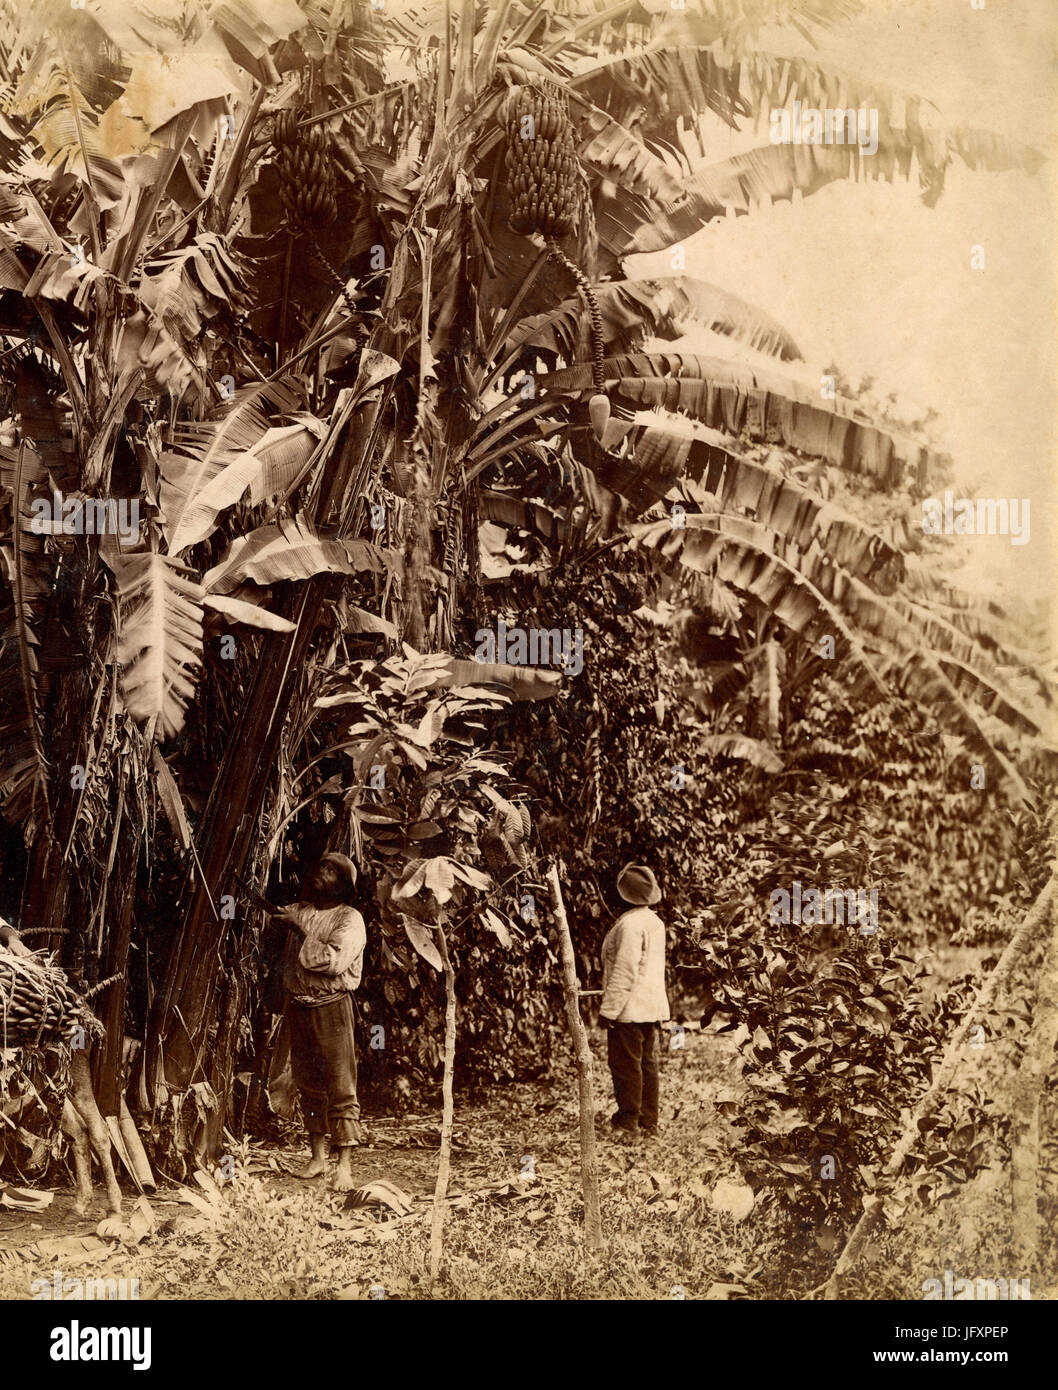 Banana pickers, Africa Stock Photo